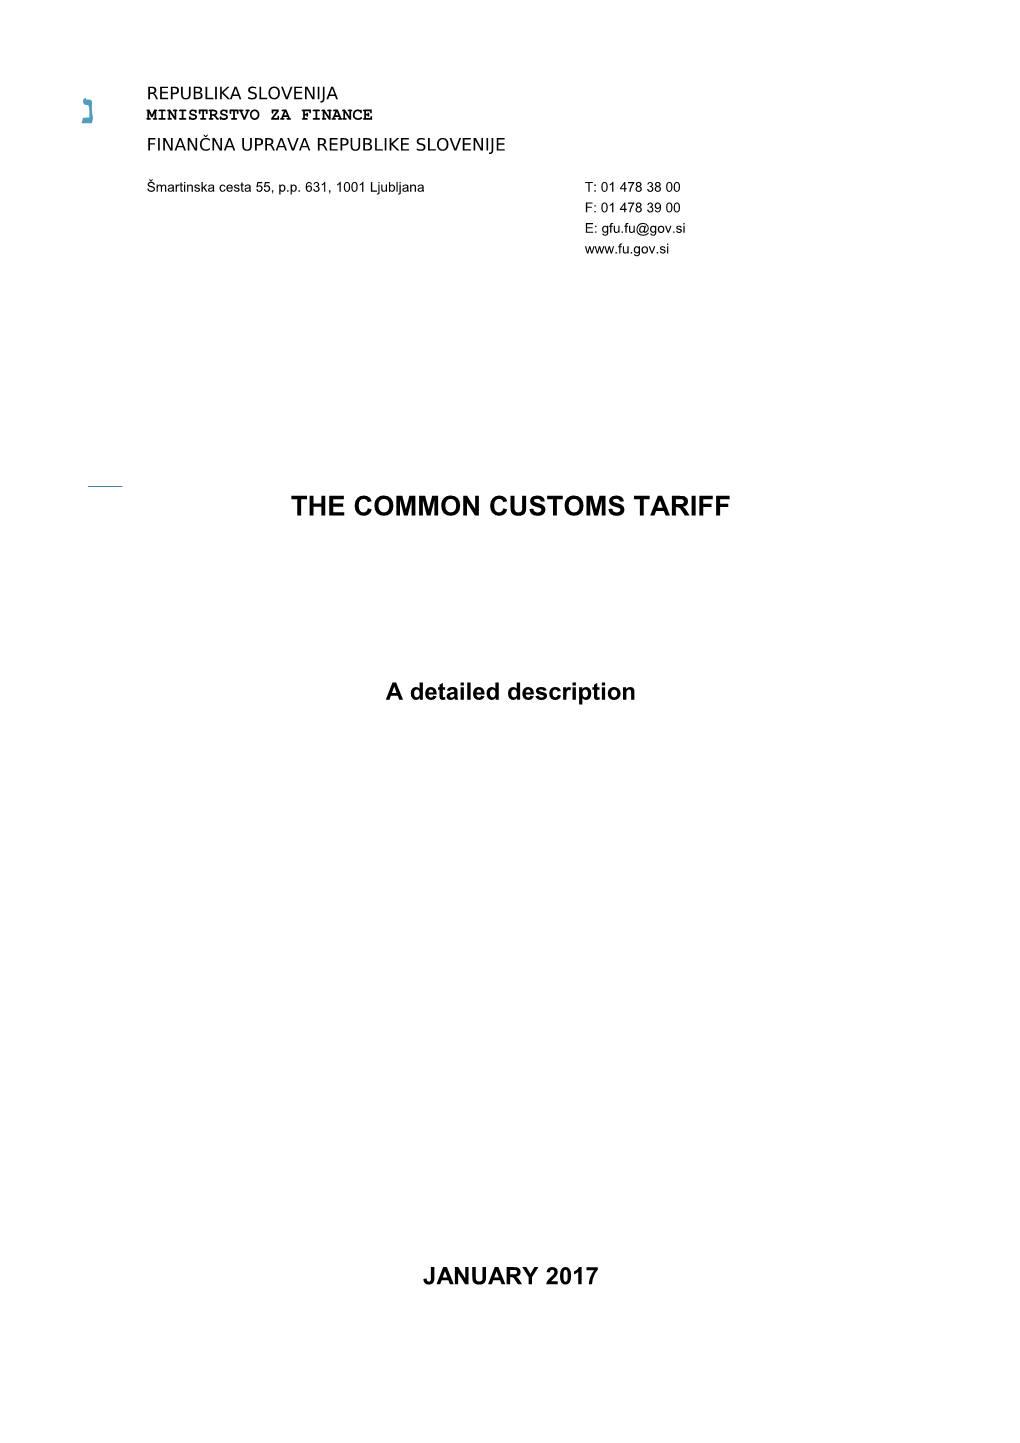 The Common Customs Tariff